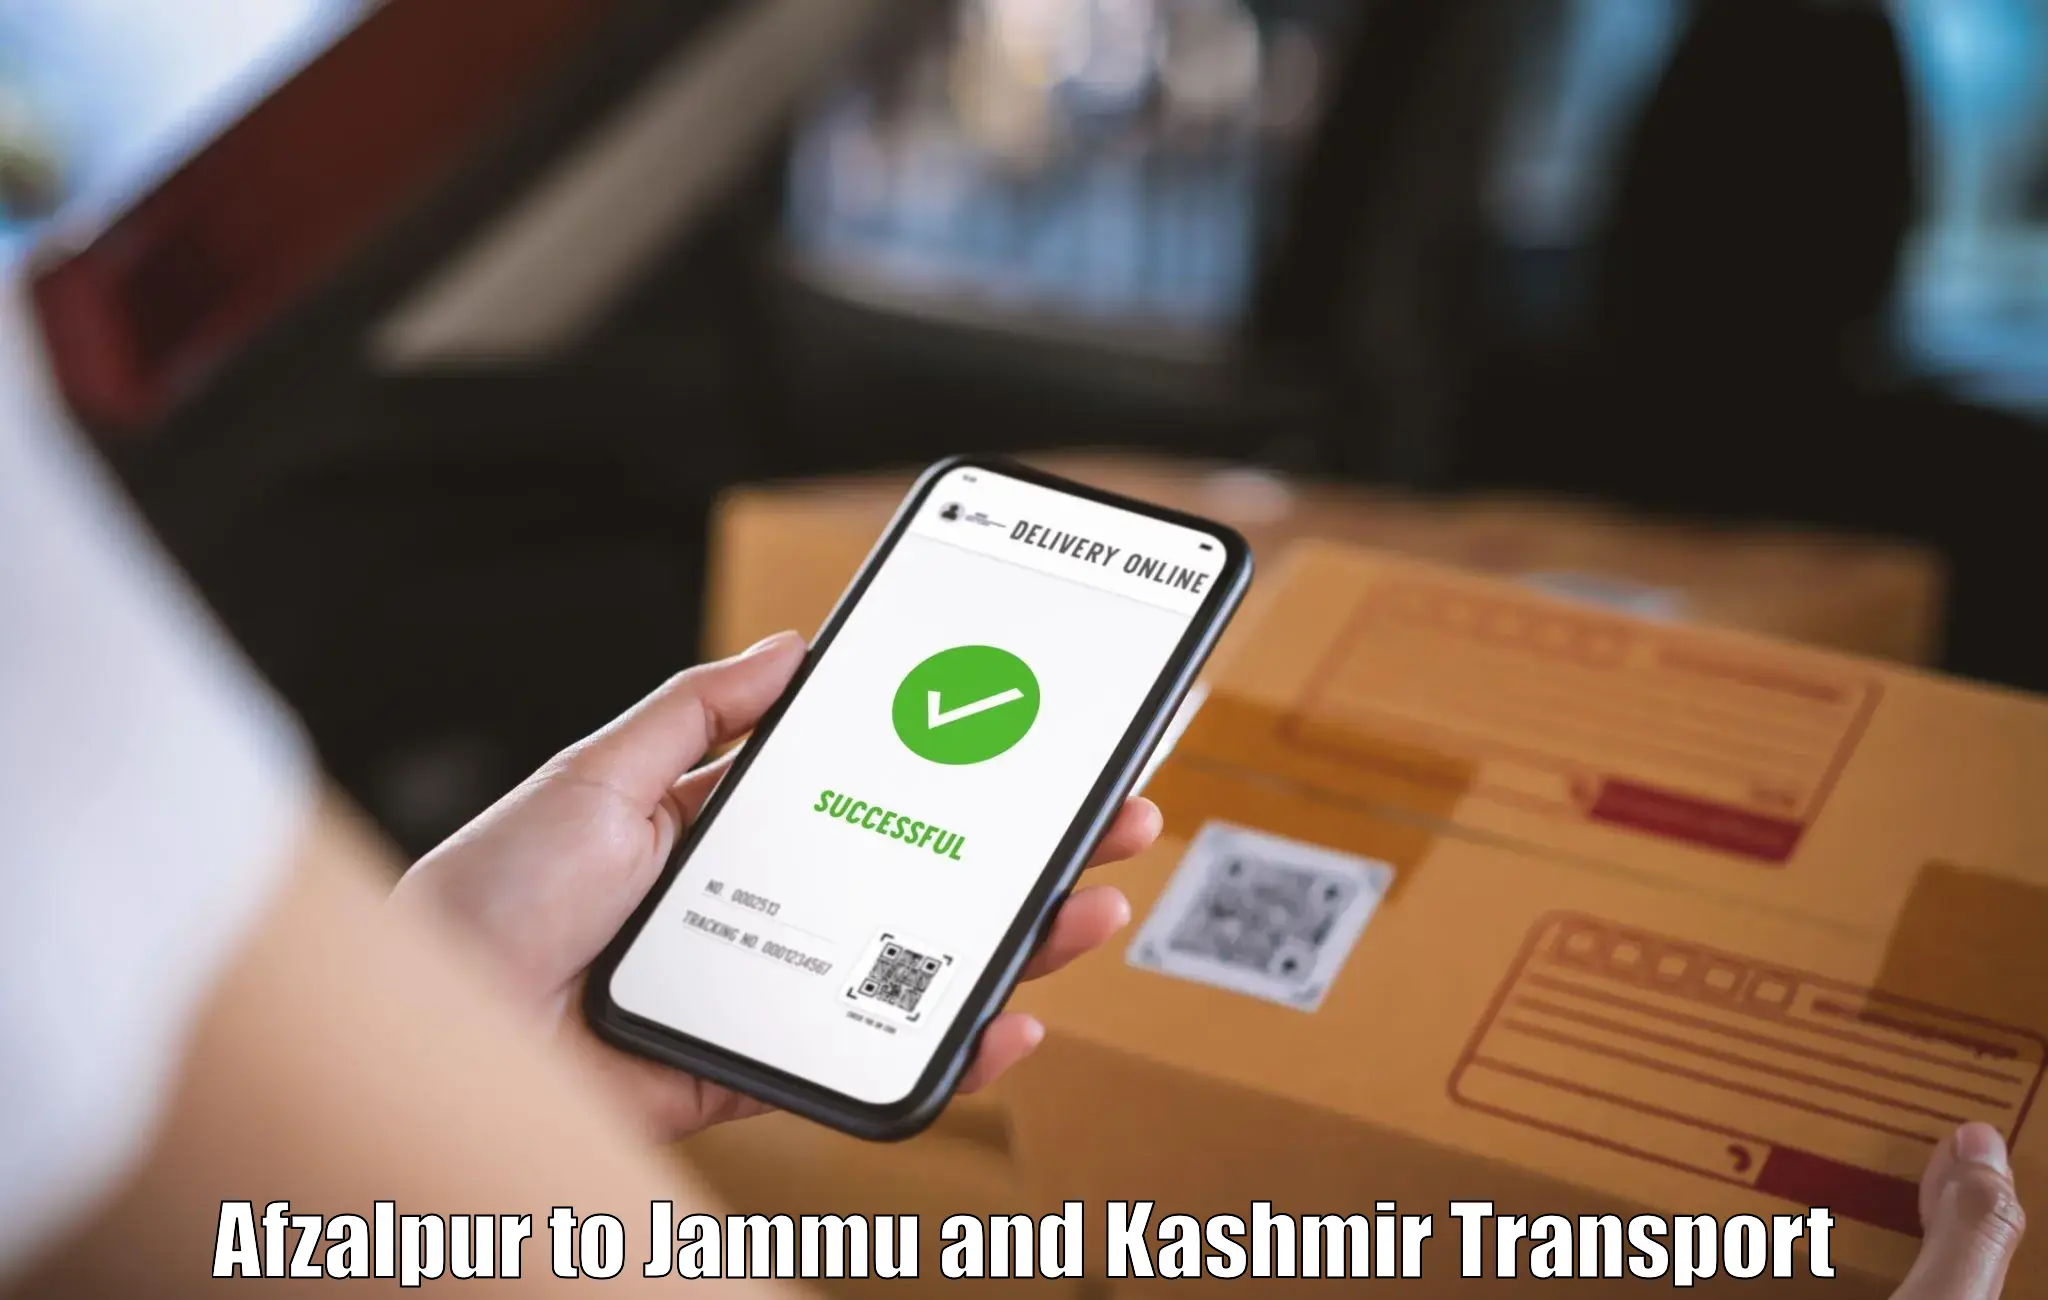 Shipping partner Afzalpur to Jammu and Kashmir